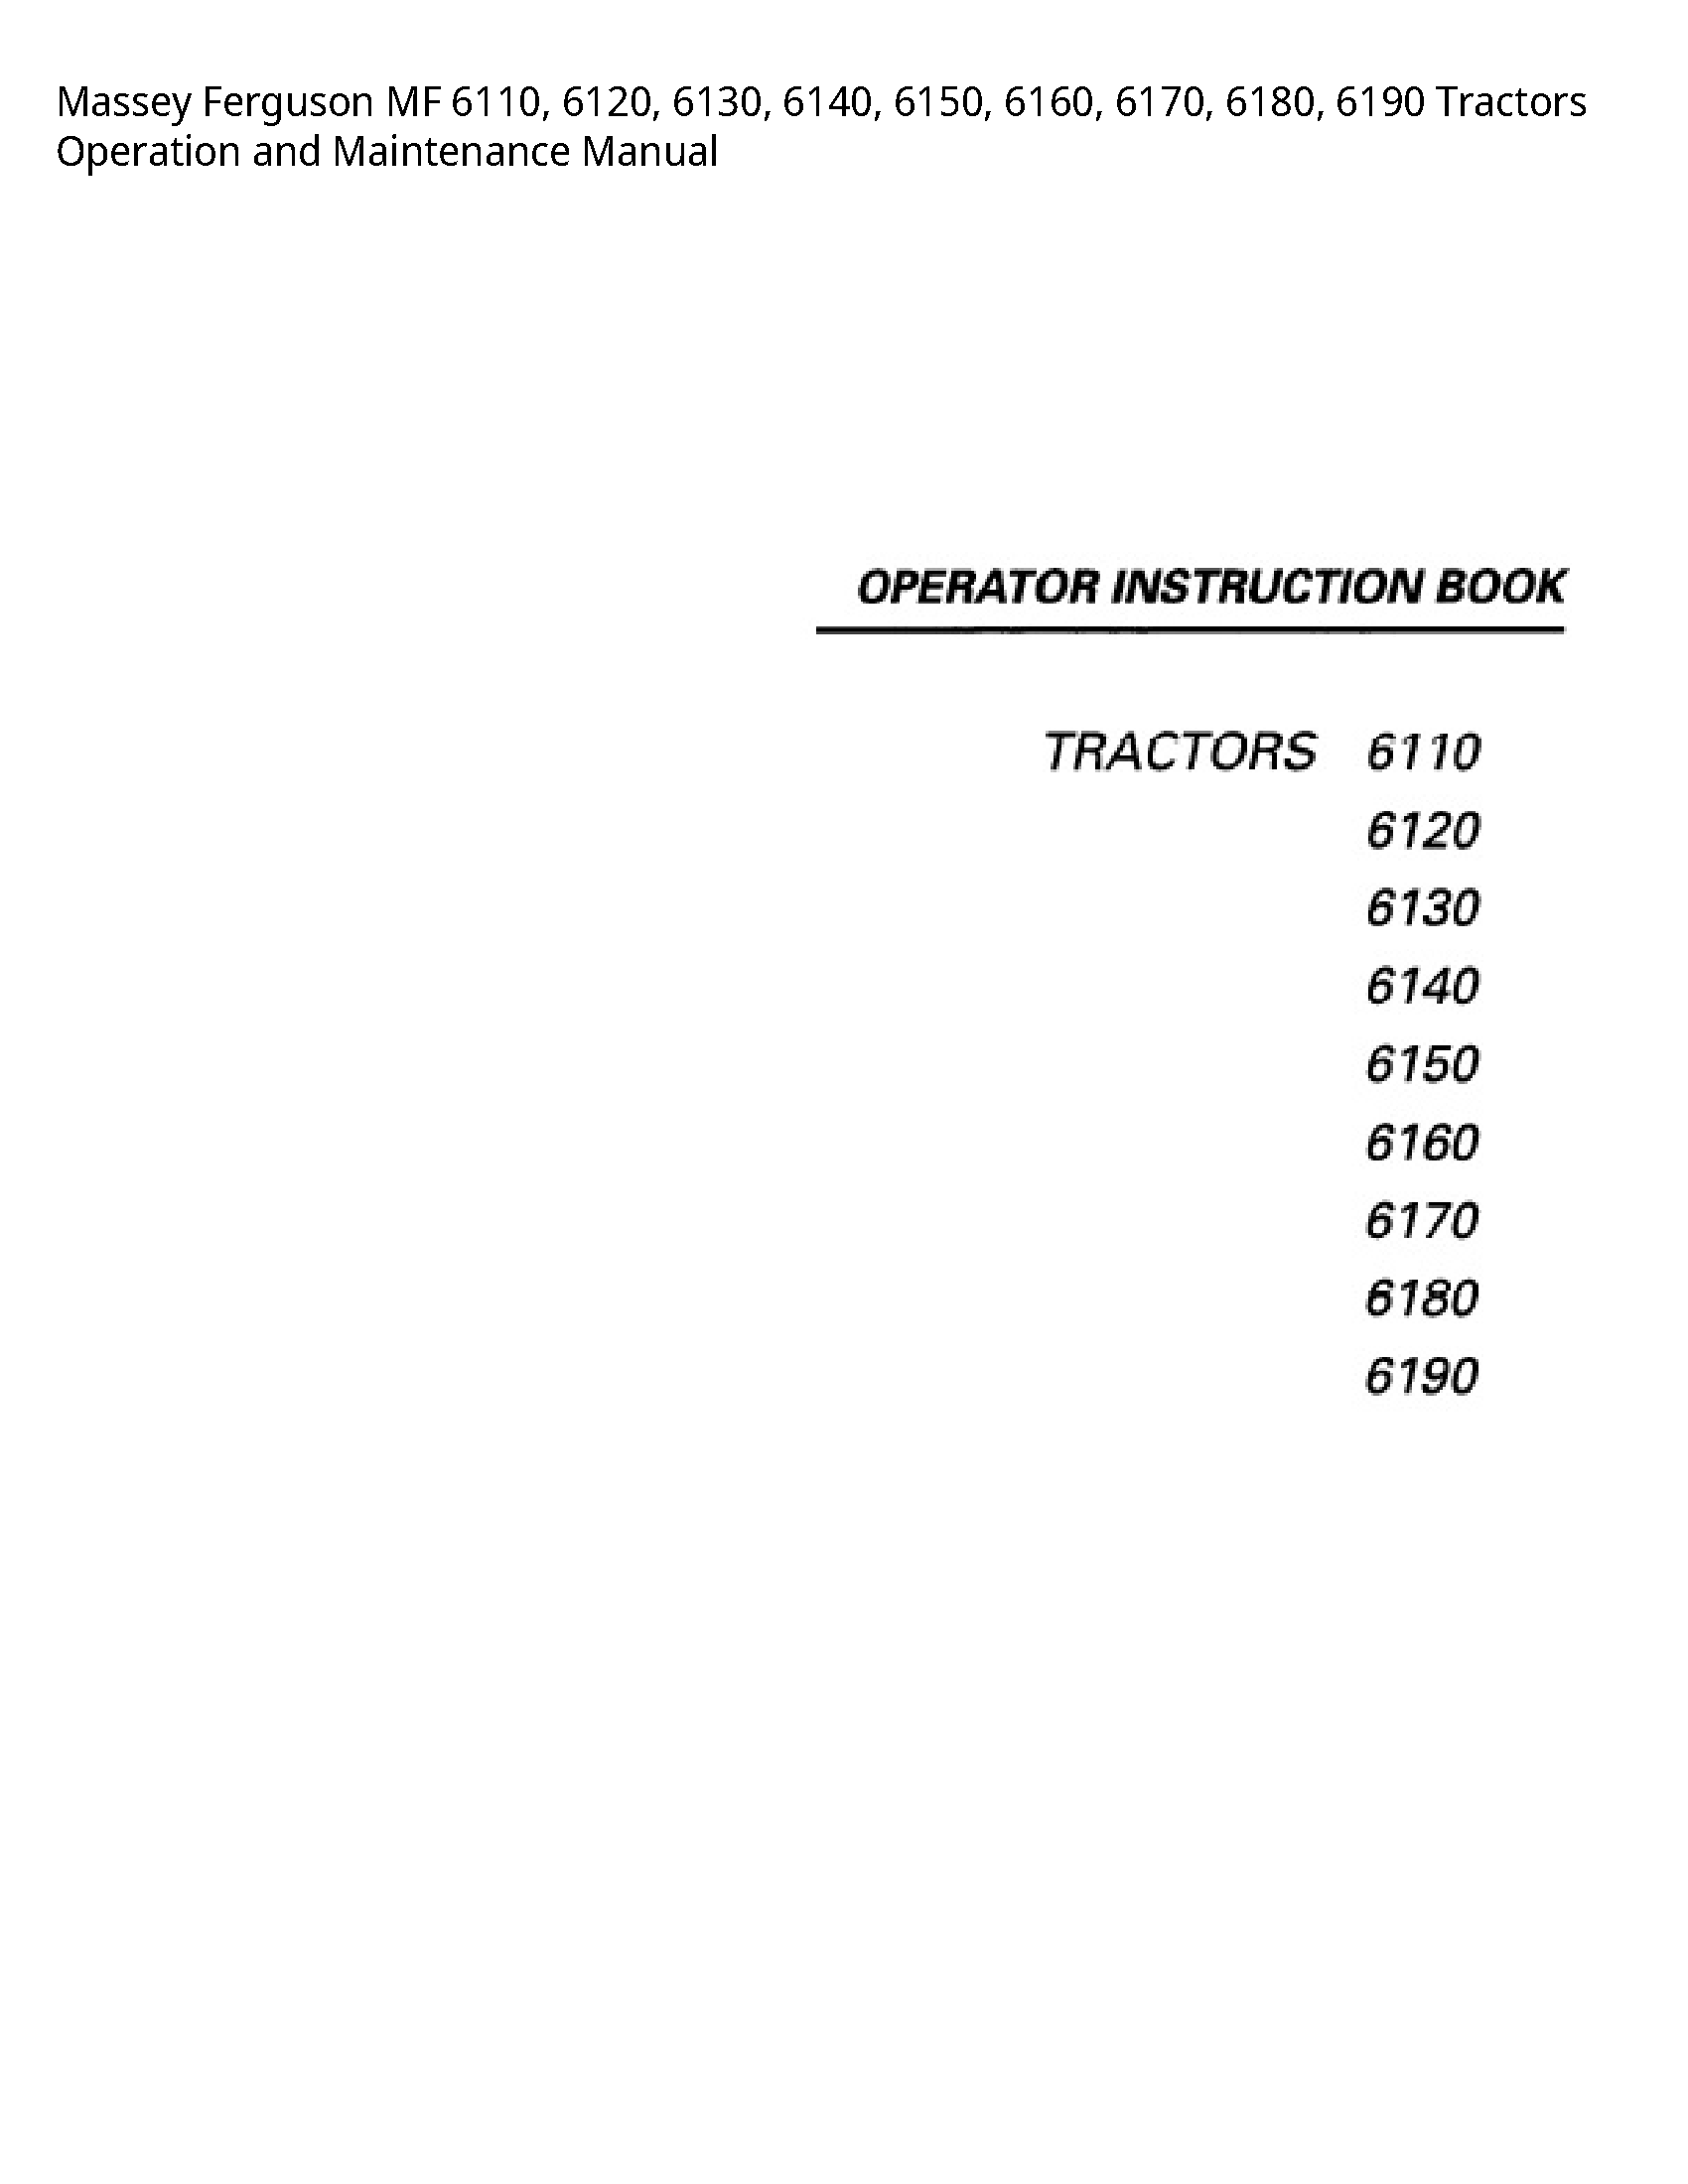 Massey Ferguson 6110 MF Tractors Operation  Maintenance manual